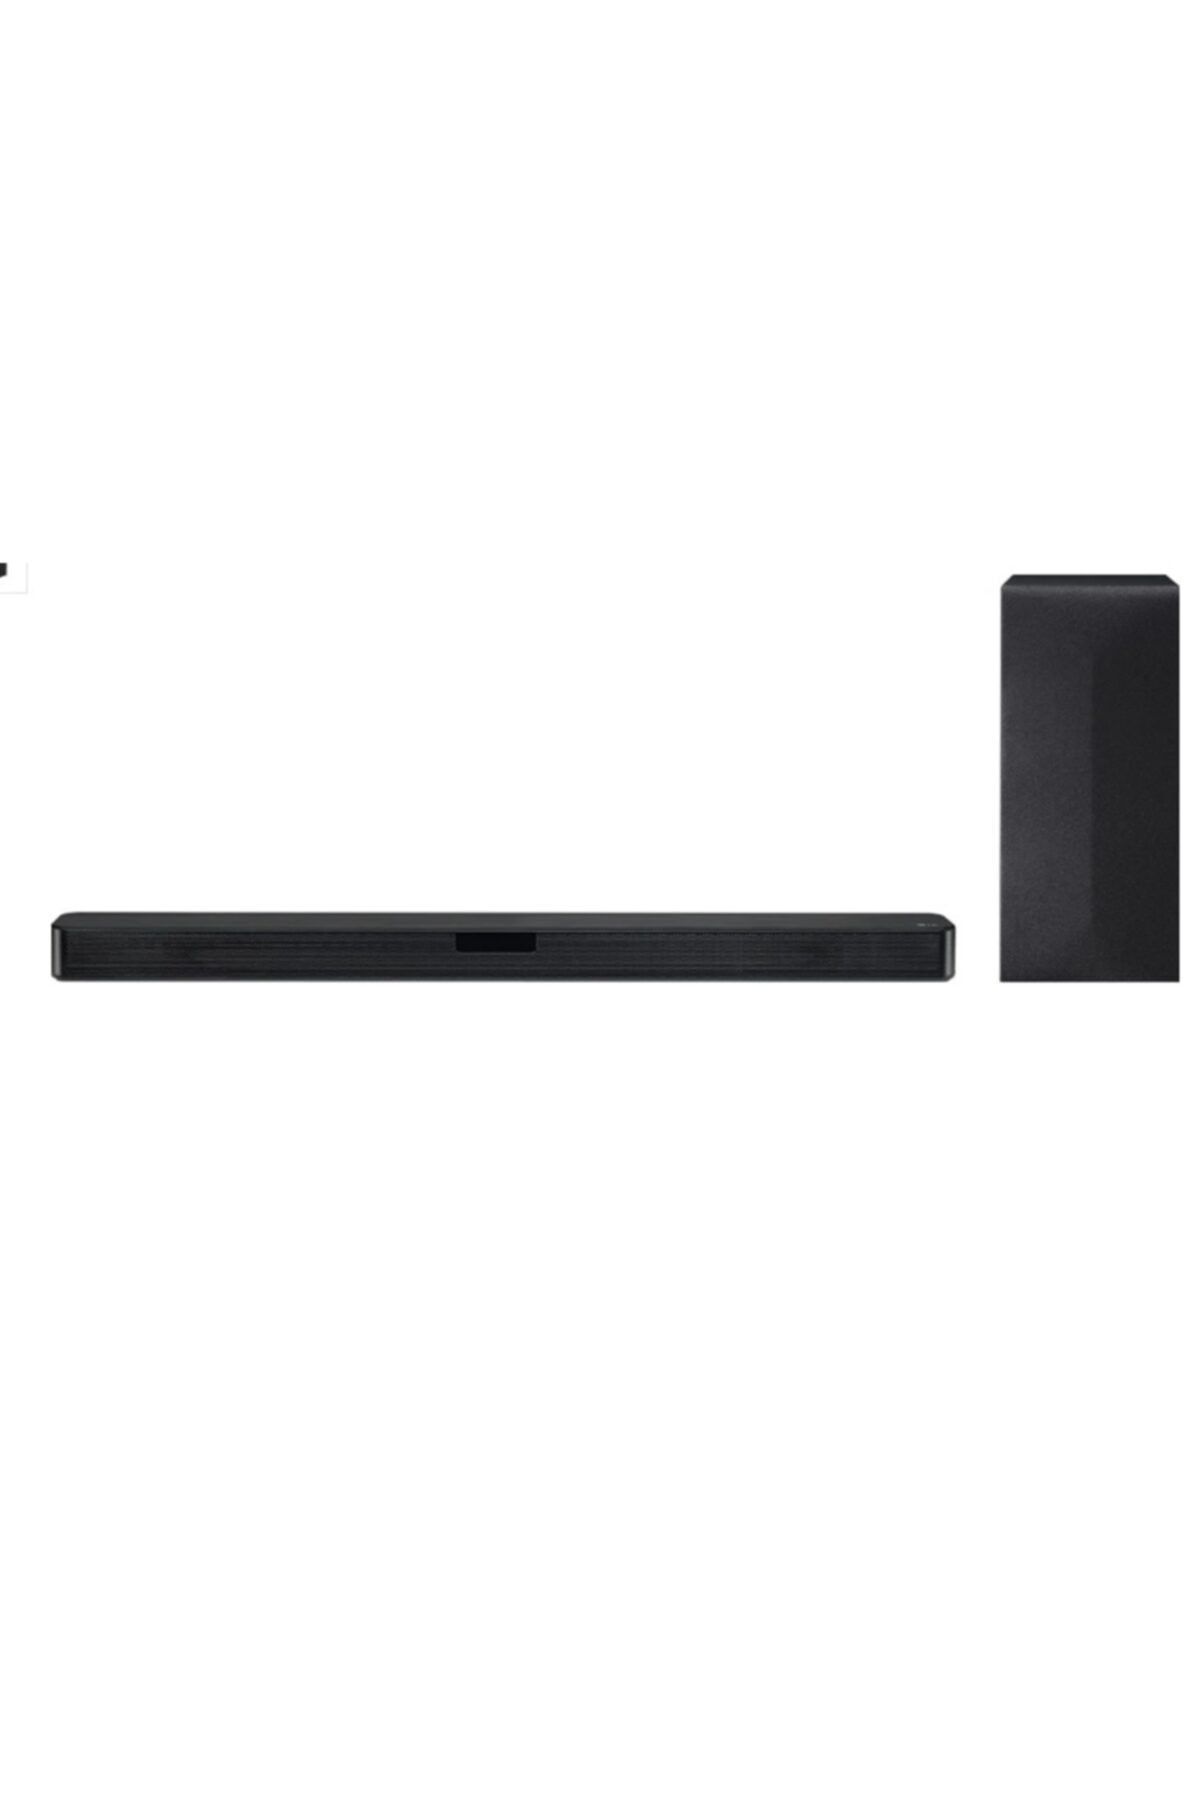 LG SN4 300 W 2.1 Kanal Bluetooth HDMI Soundbar